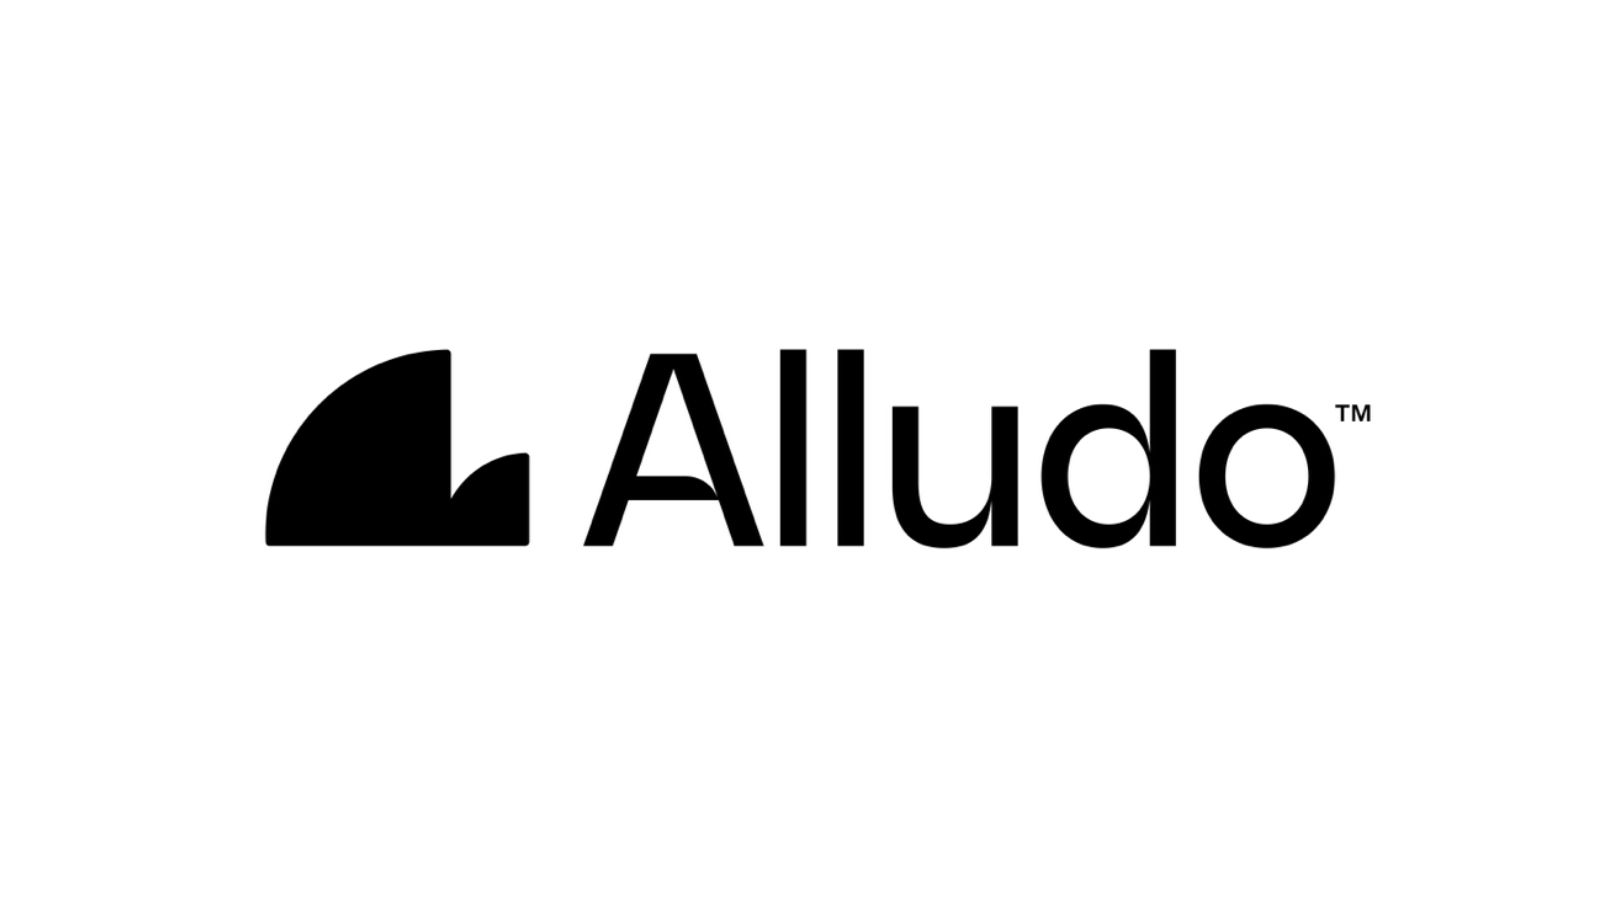 Corel 公司更名Alludo 並啟用全新品牌形象 AD518.com 最設計 3